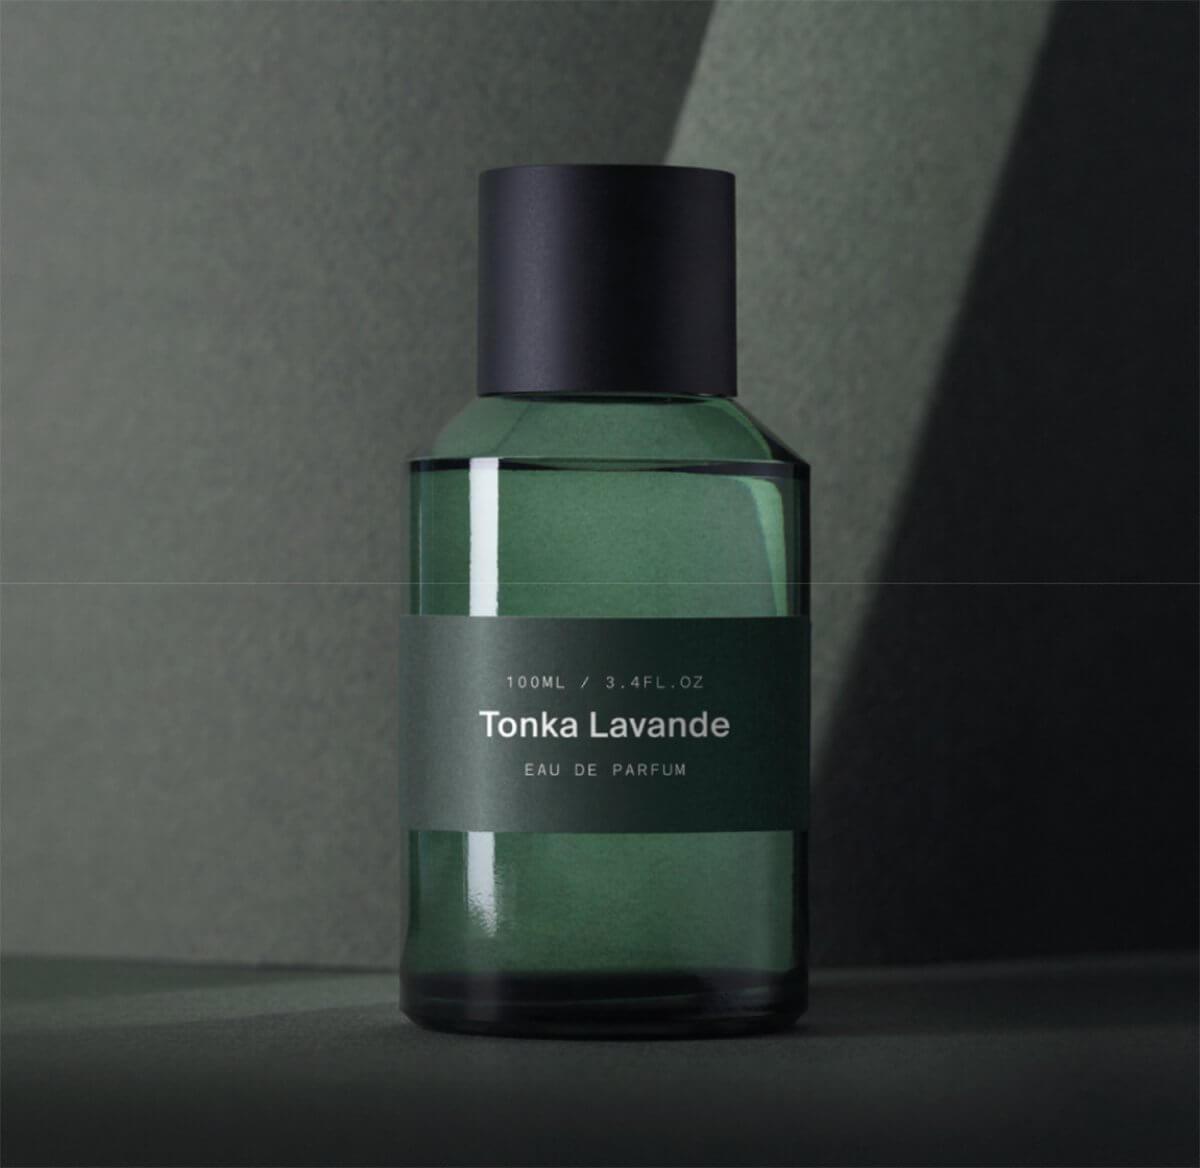 Tonka Lavande - Indigo Perfumery